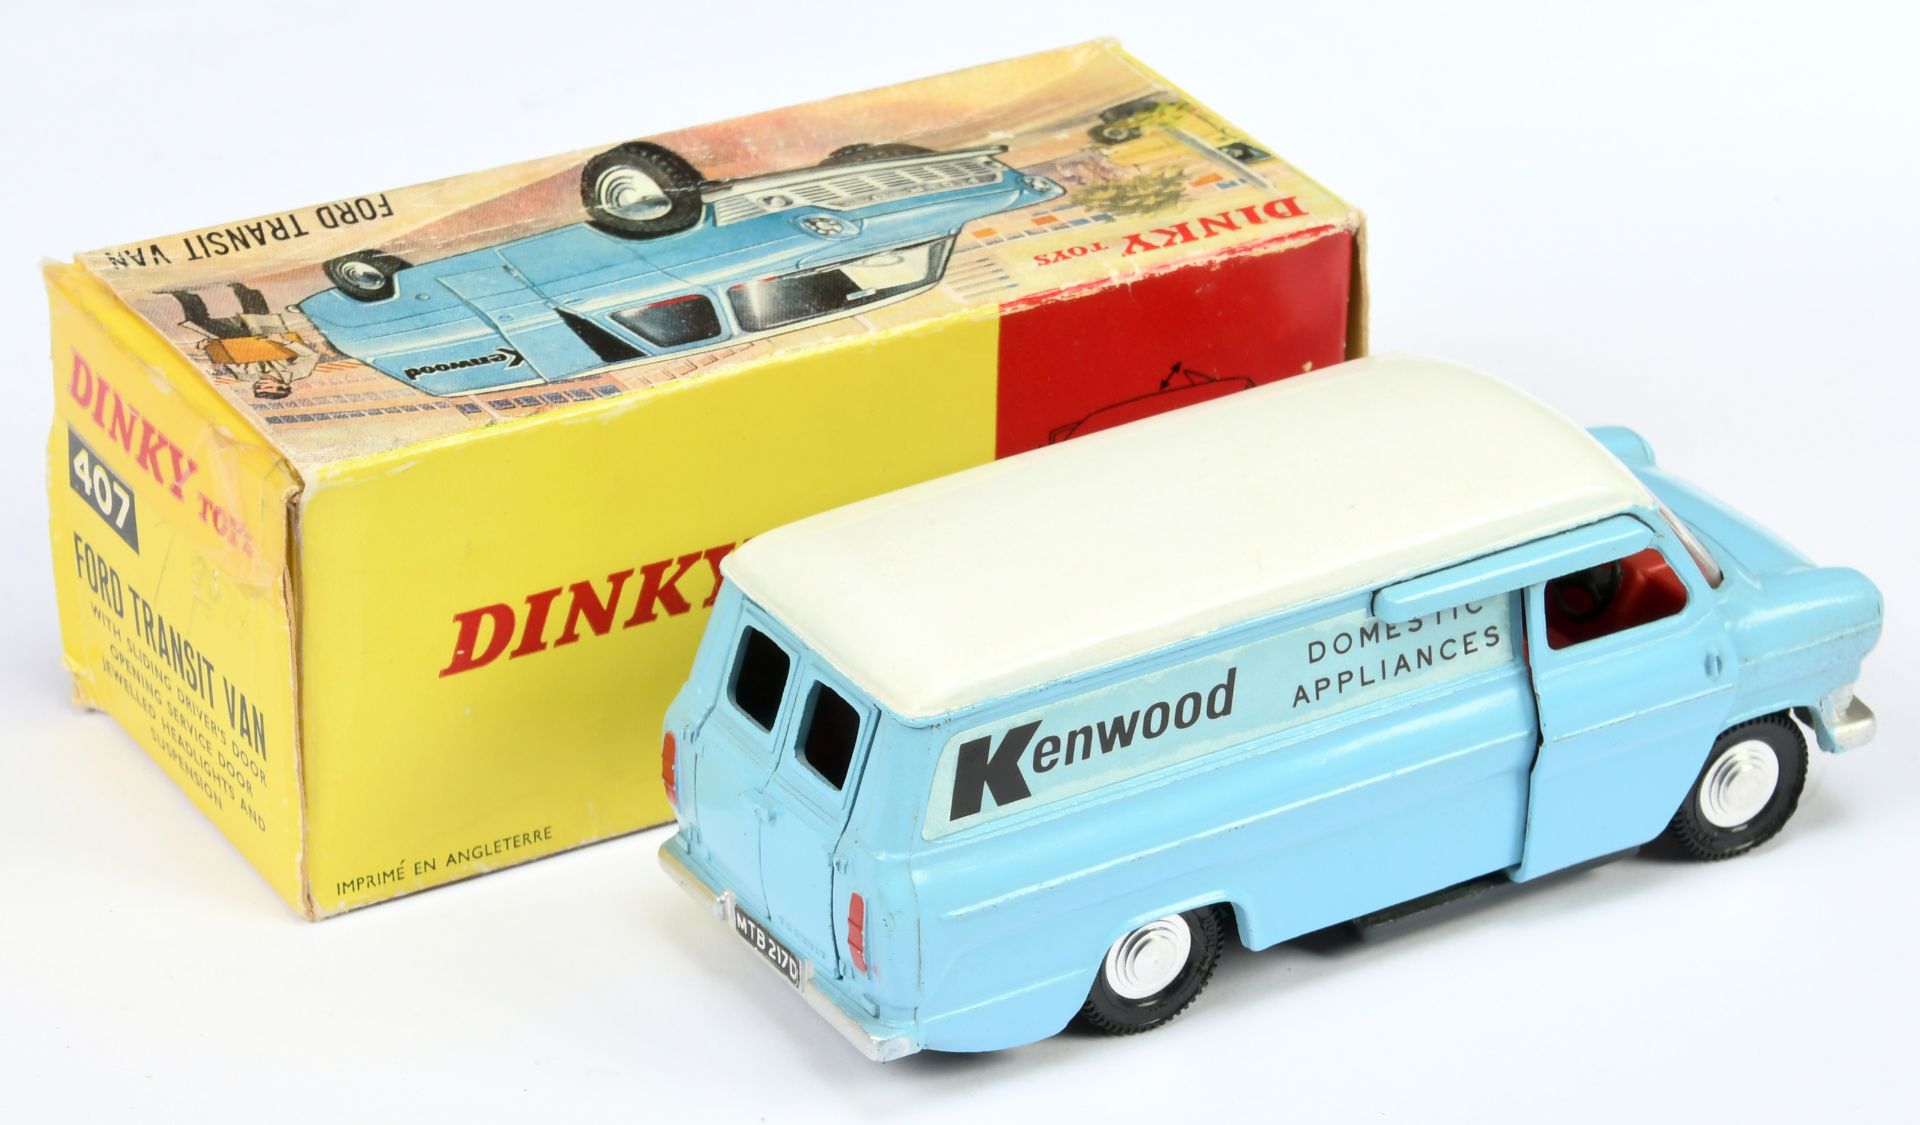 Dinky Toys 407 Ford transit van "Kenwood" - light blue body, white roof, dark grey base, red inte... - Bild 2 aus 2